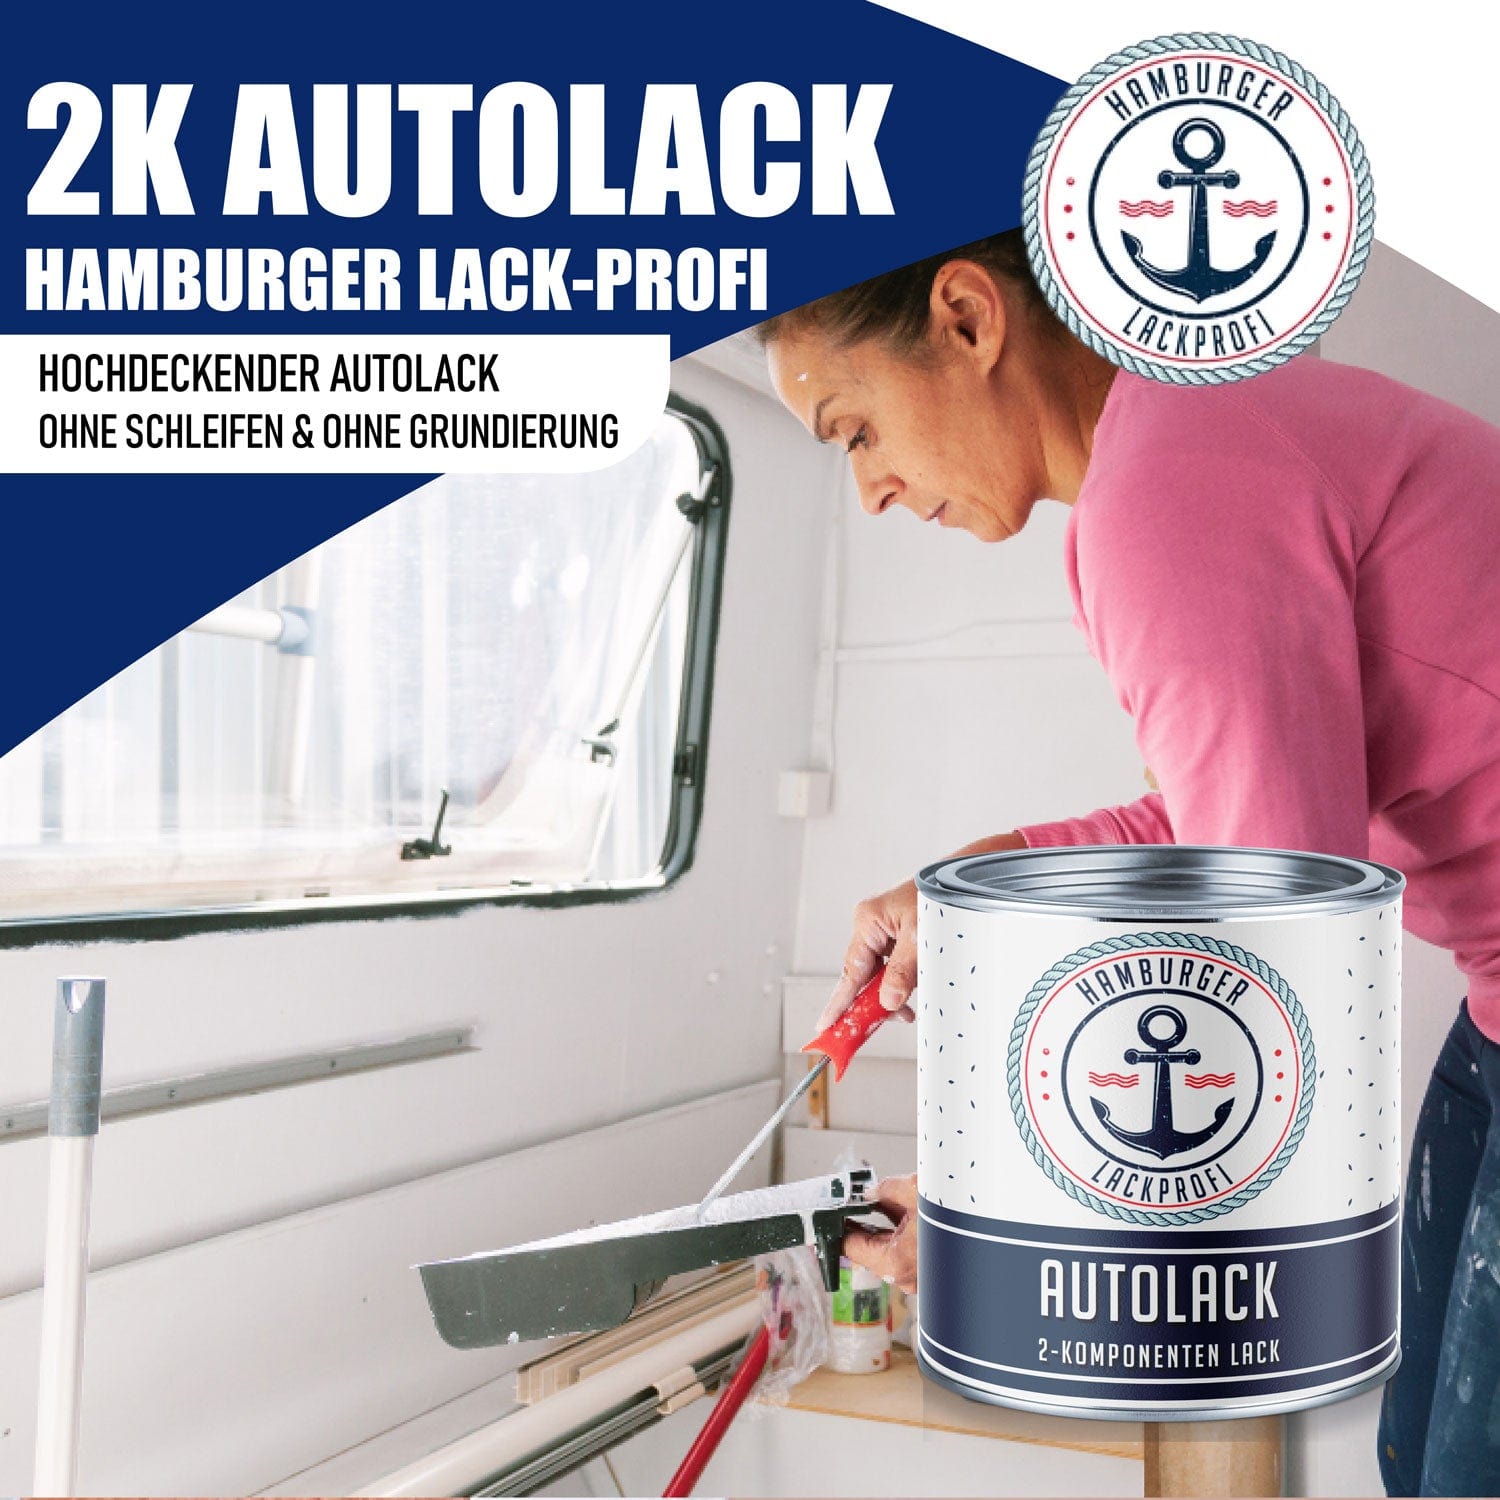 Hamburger Lack-Profi Lacke & Beschichtungen Hamburger Lack-Profi 2K Autolack in Verkehrsrot RAL 3020 mit Lackierset (X300) & Verdünnung (1 L) - 30% Sparangebot